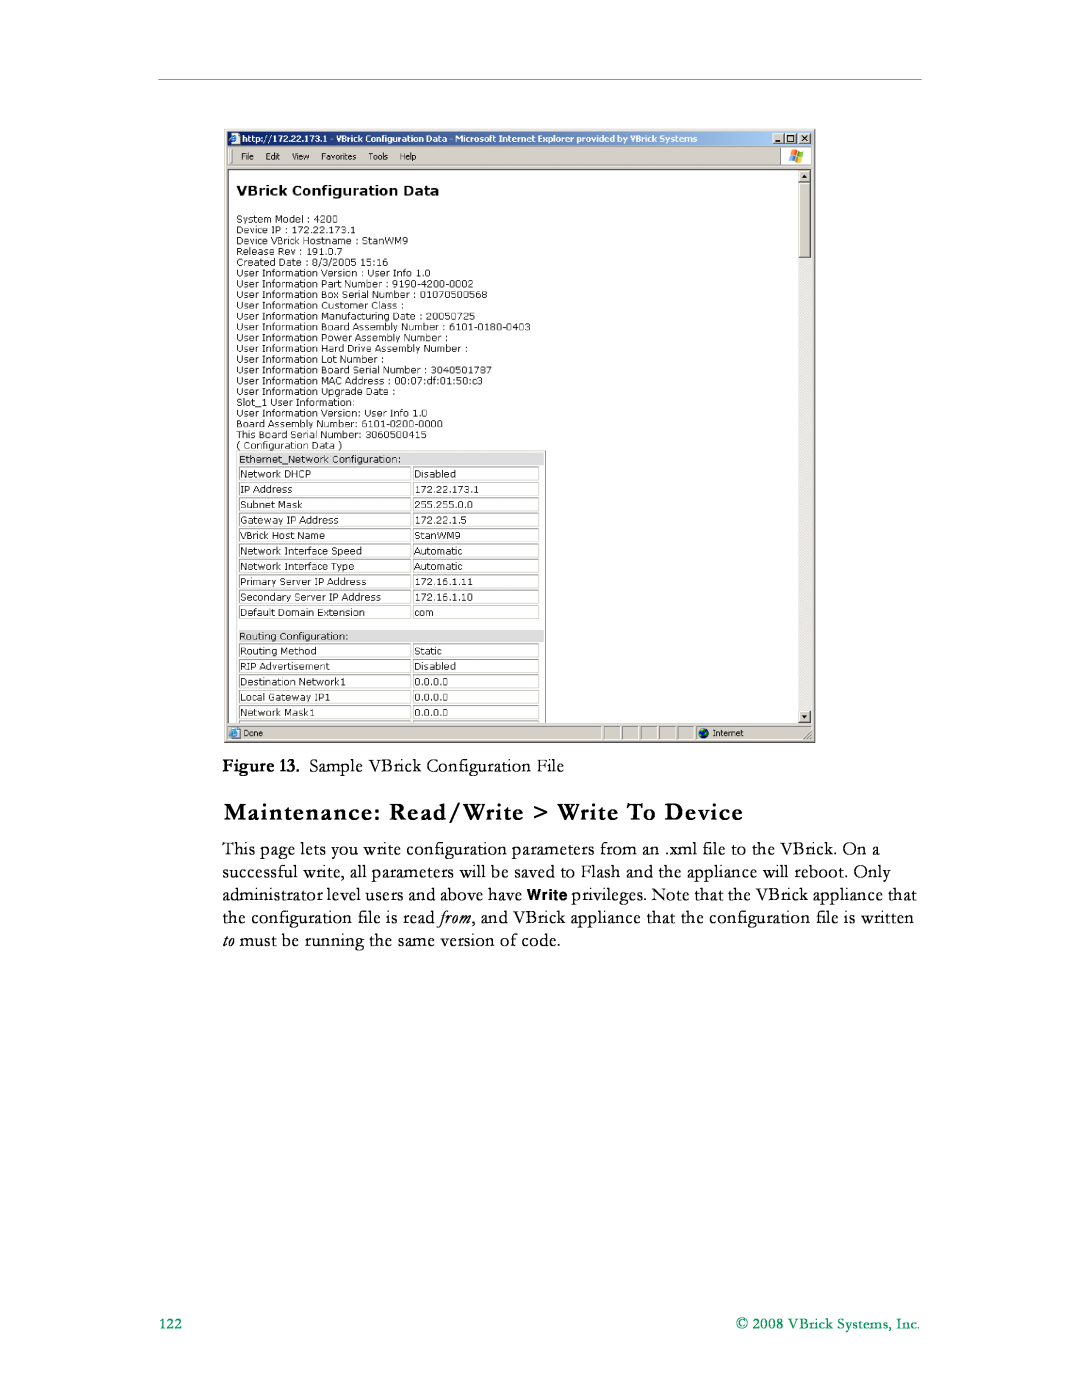 VBrick Systems VB6000, VB4000, VB5000 manual Maintenance Read/Write Write To Device 